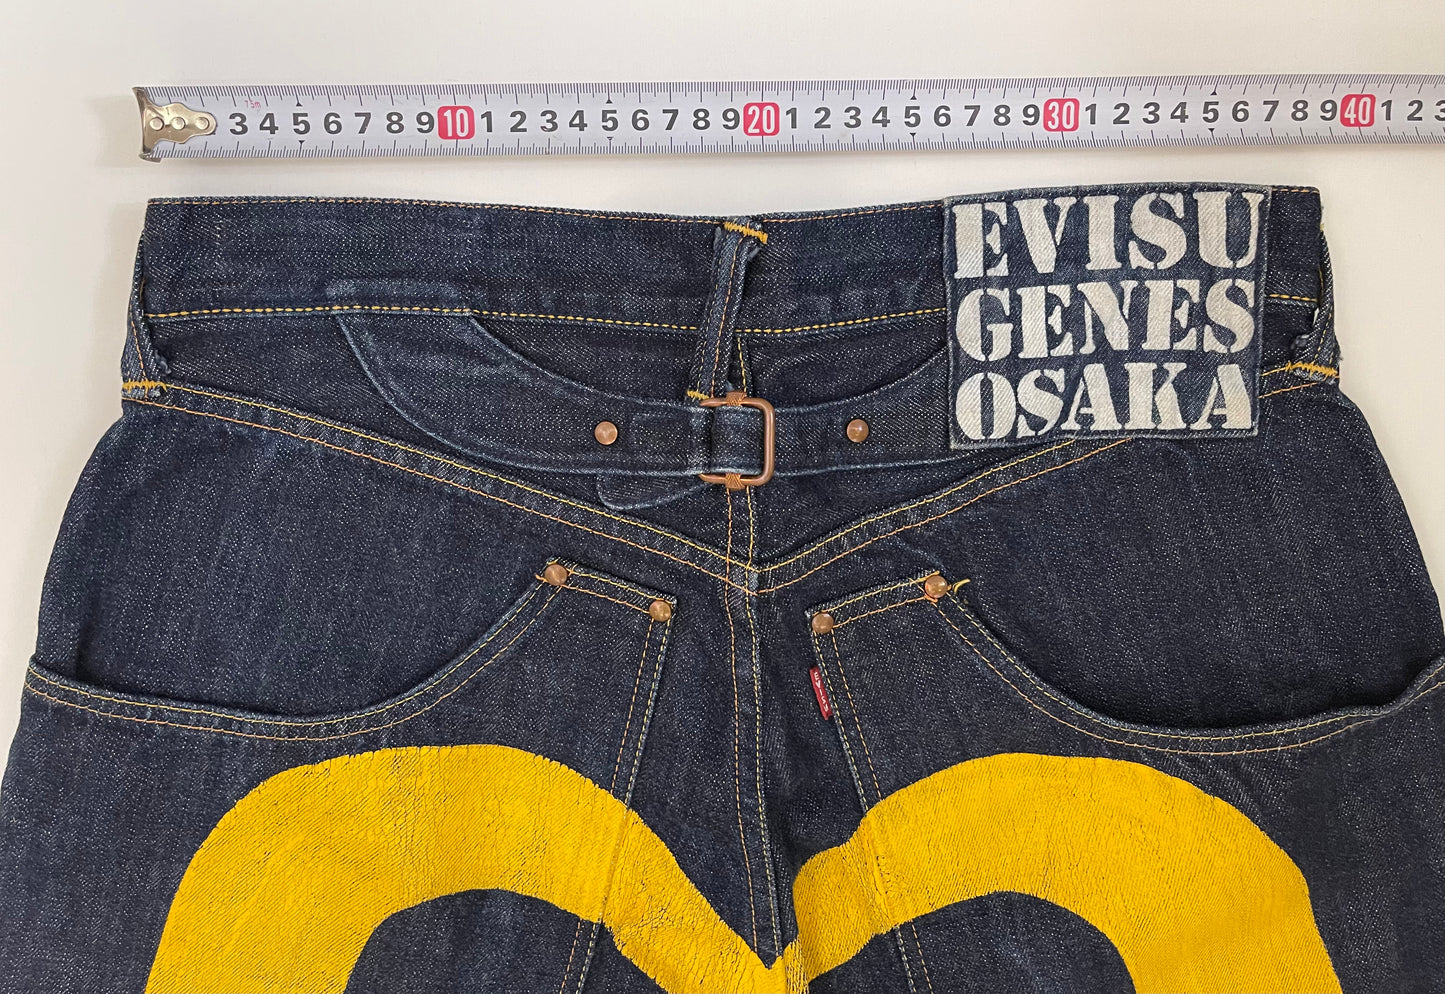 Japanese Amekaji Evisu Genes Osaka Kanji Yellow Paint Denim Jeans 33 x 35 in